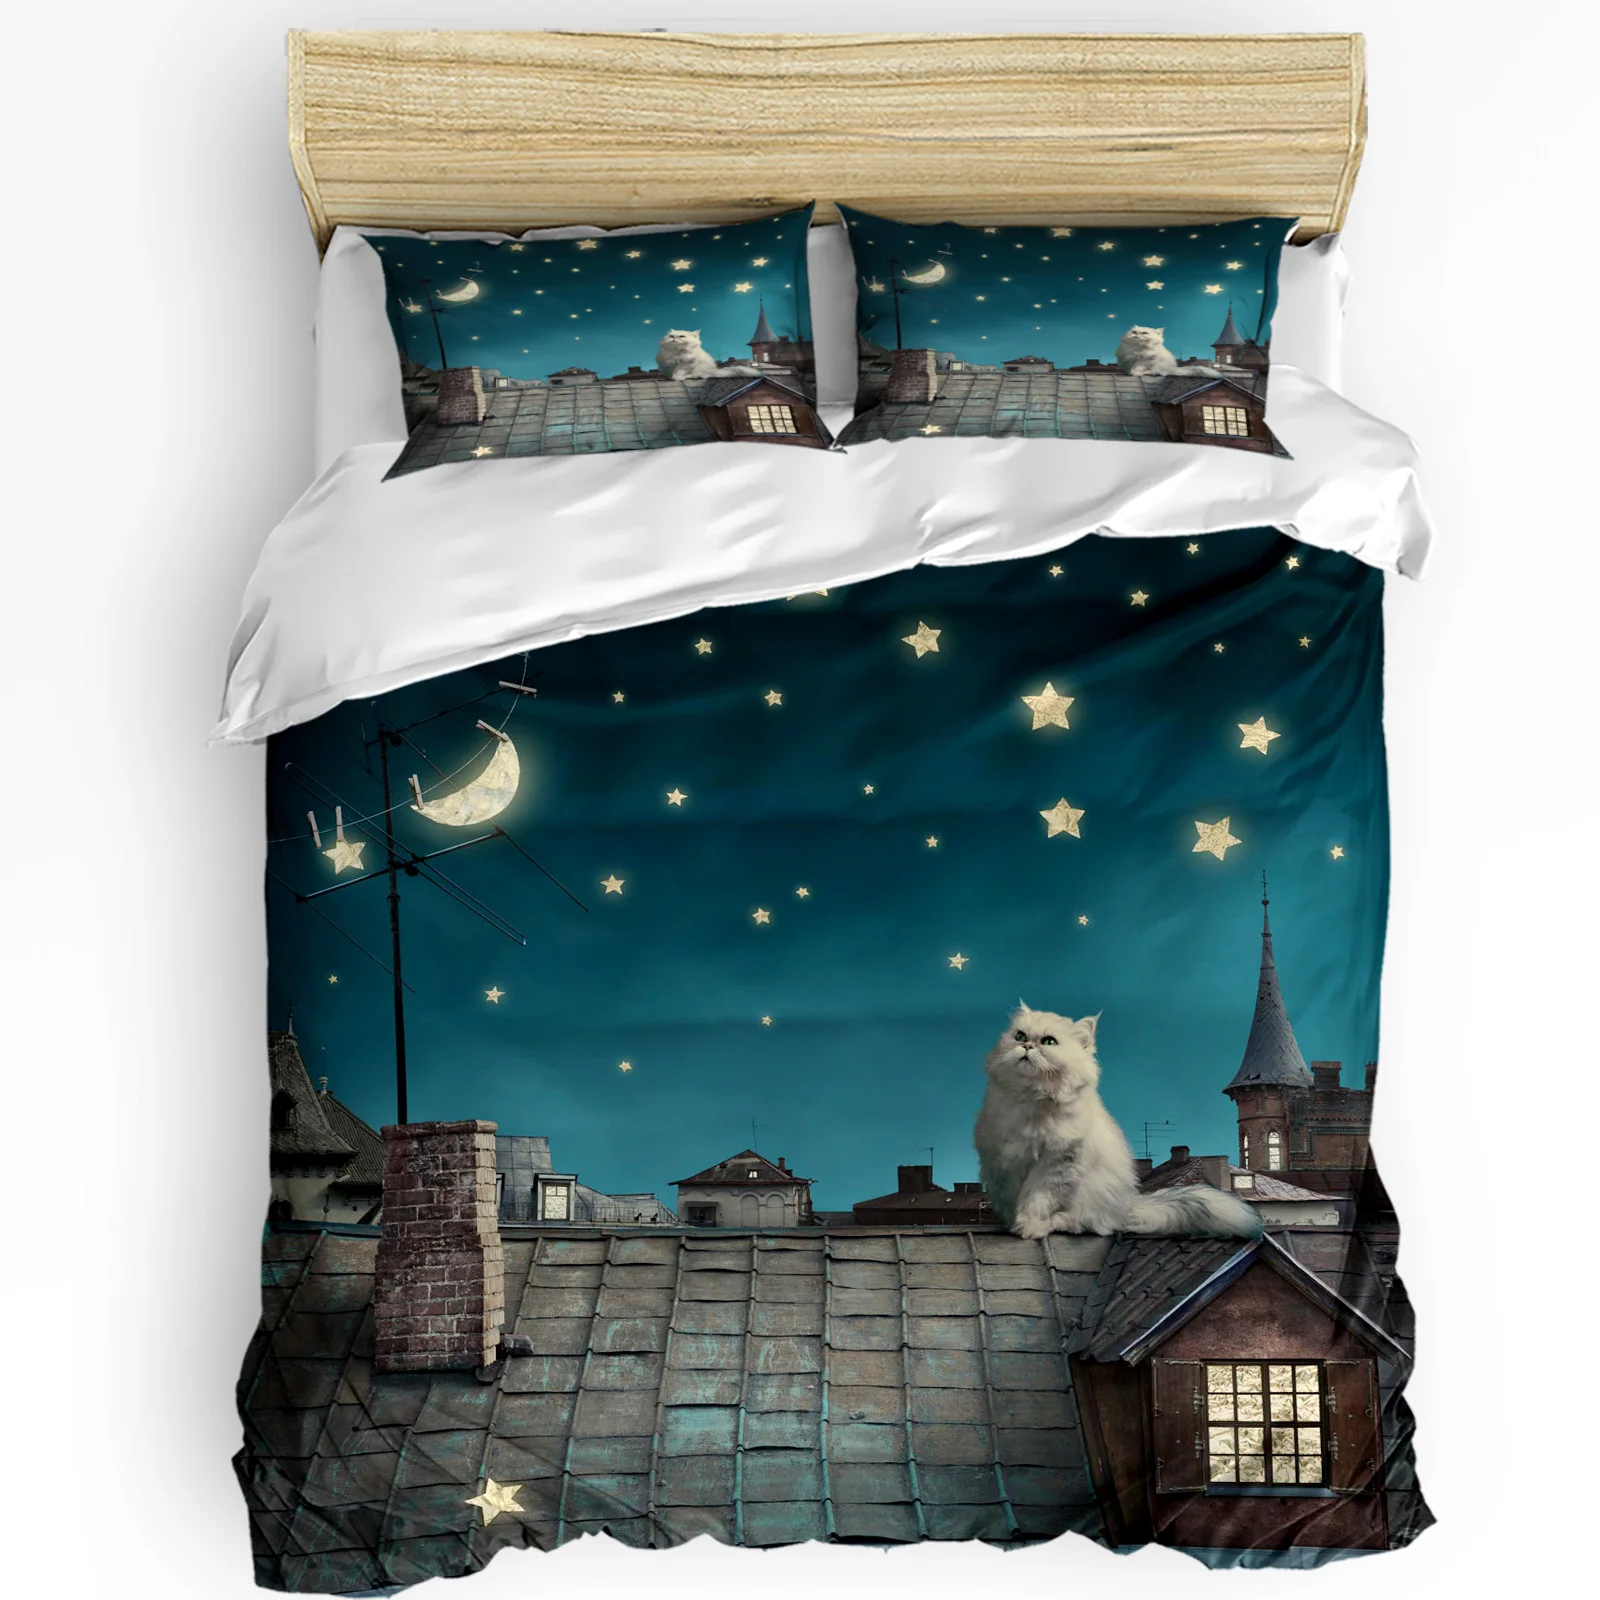 

Roof Kitten Night Moon Stars Printed Comfort Duvet Cover Pillow Case Home Textile Quilt Cover Boy Kid Teen Girl 3pcs Bedding Set